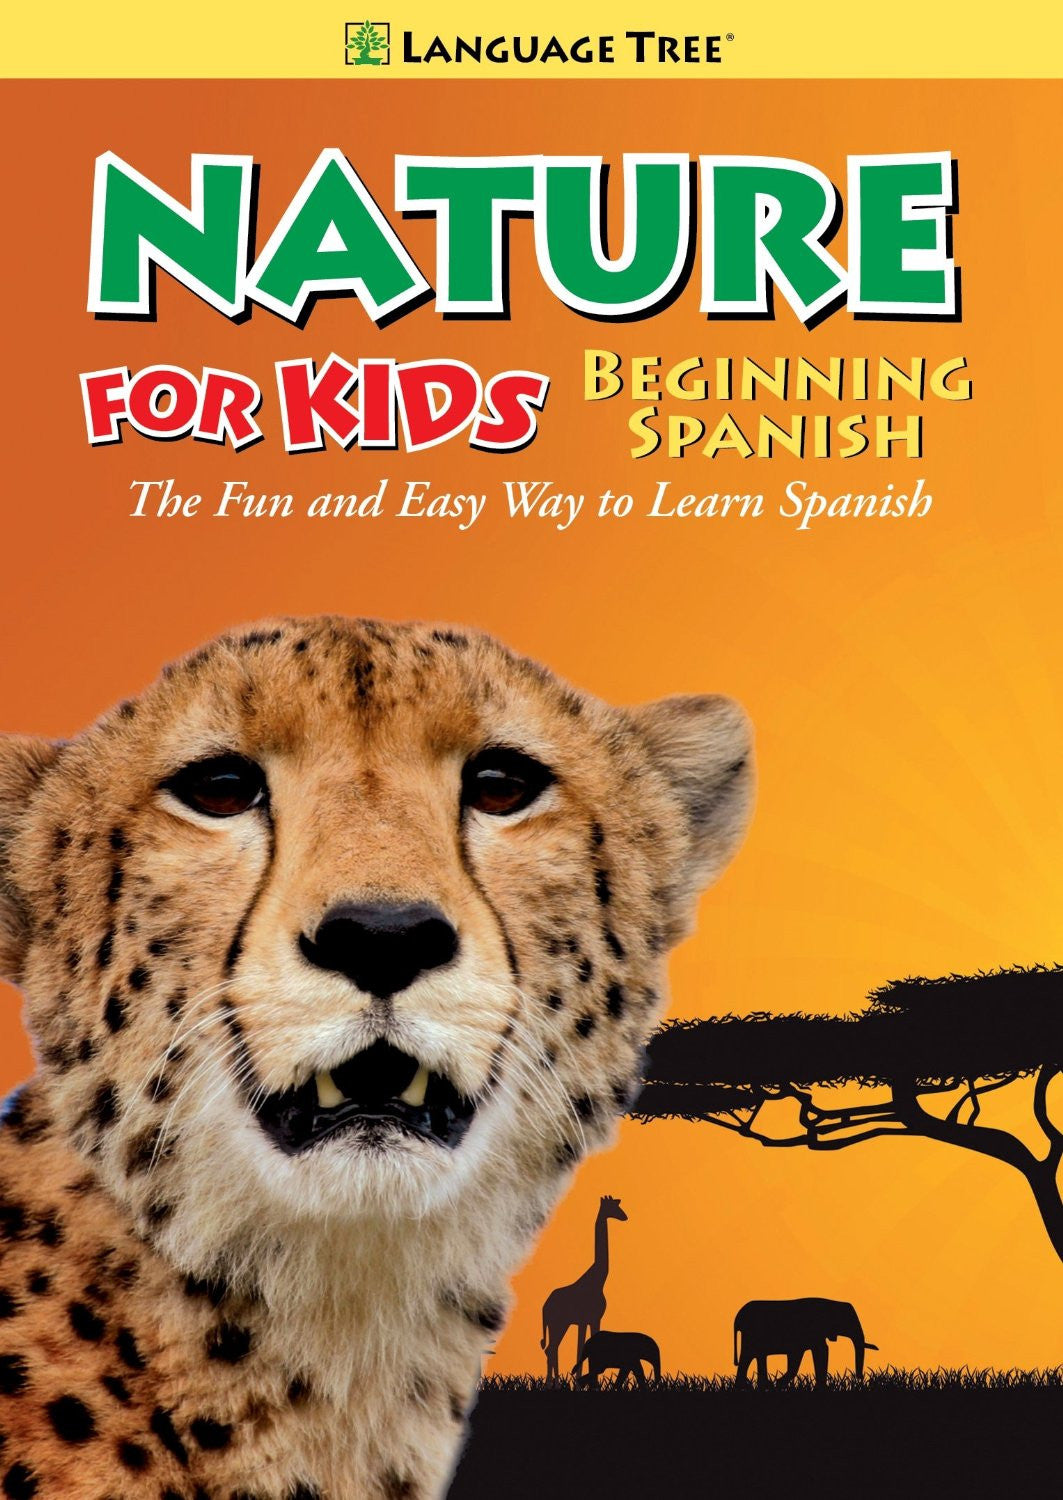 Nature for Kids Learn Spanish / Beginning Spanish DVD